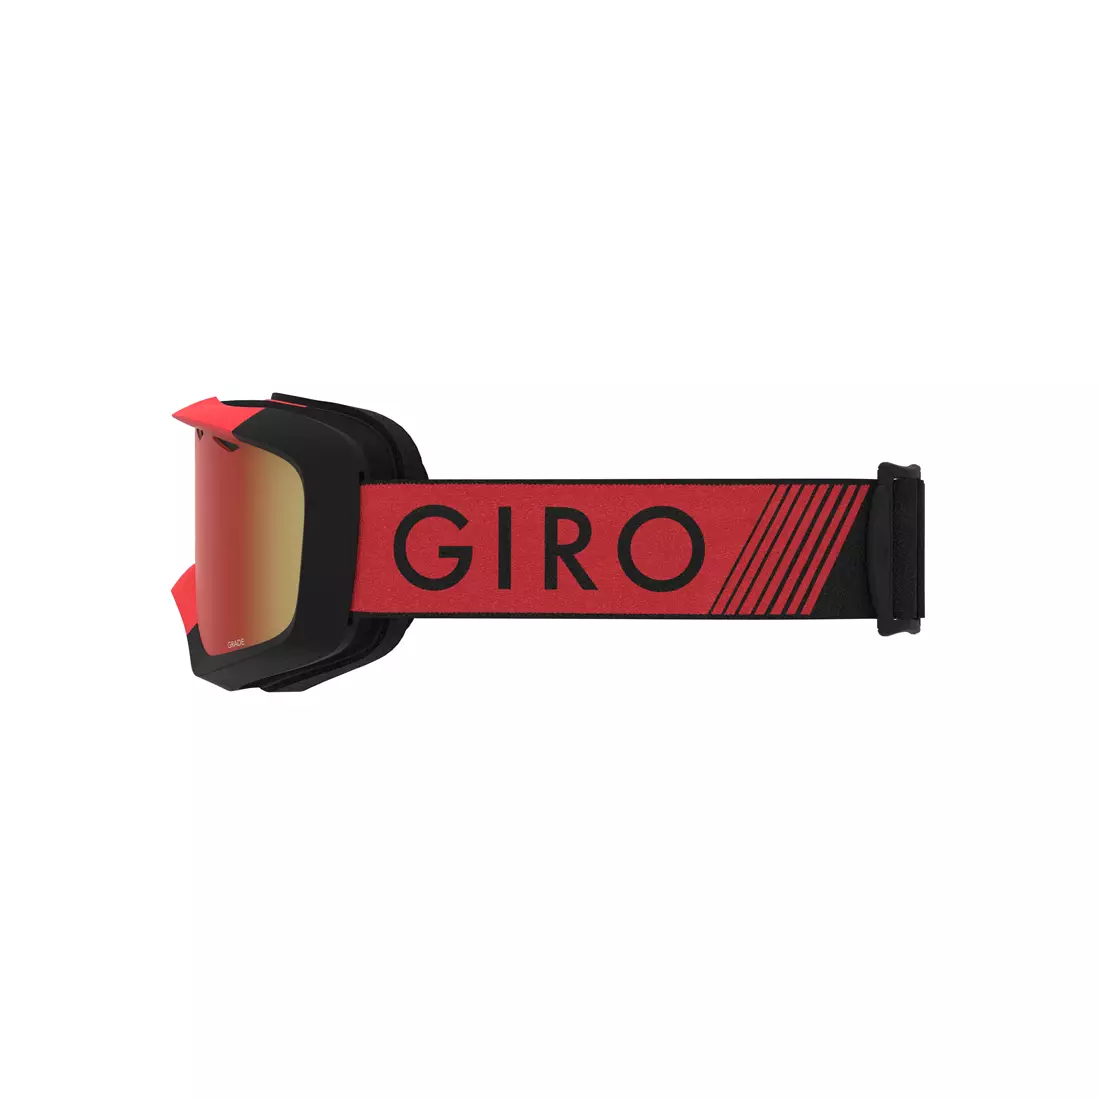 Junior ski / snowboard goggles GRADE RED BLACK ZOOM GR-7083108